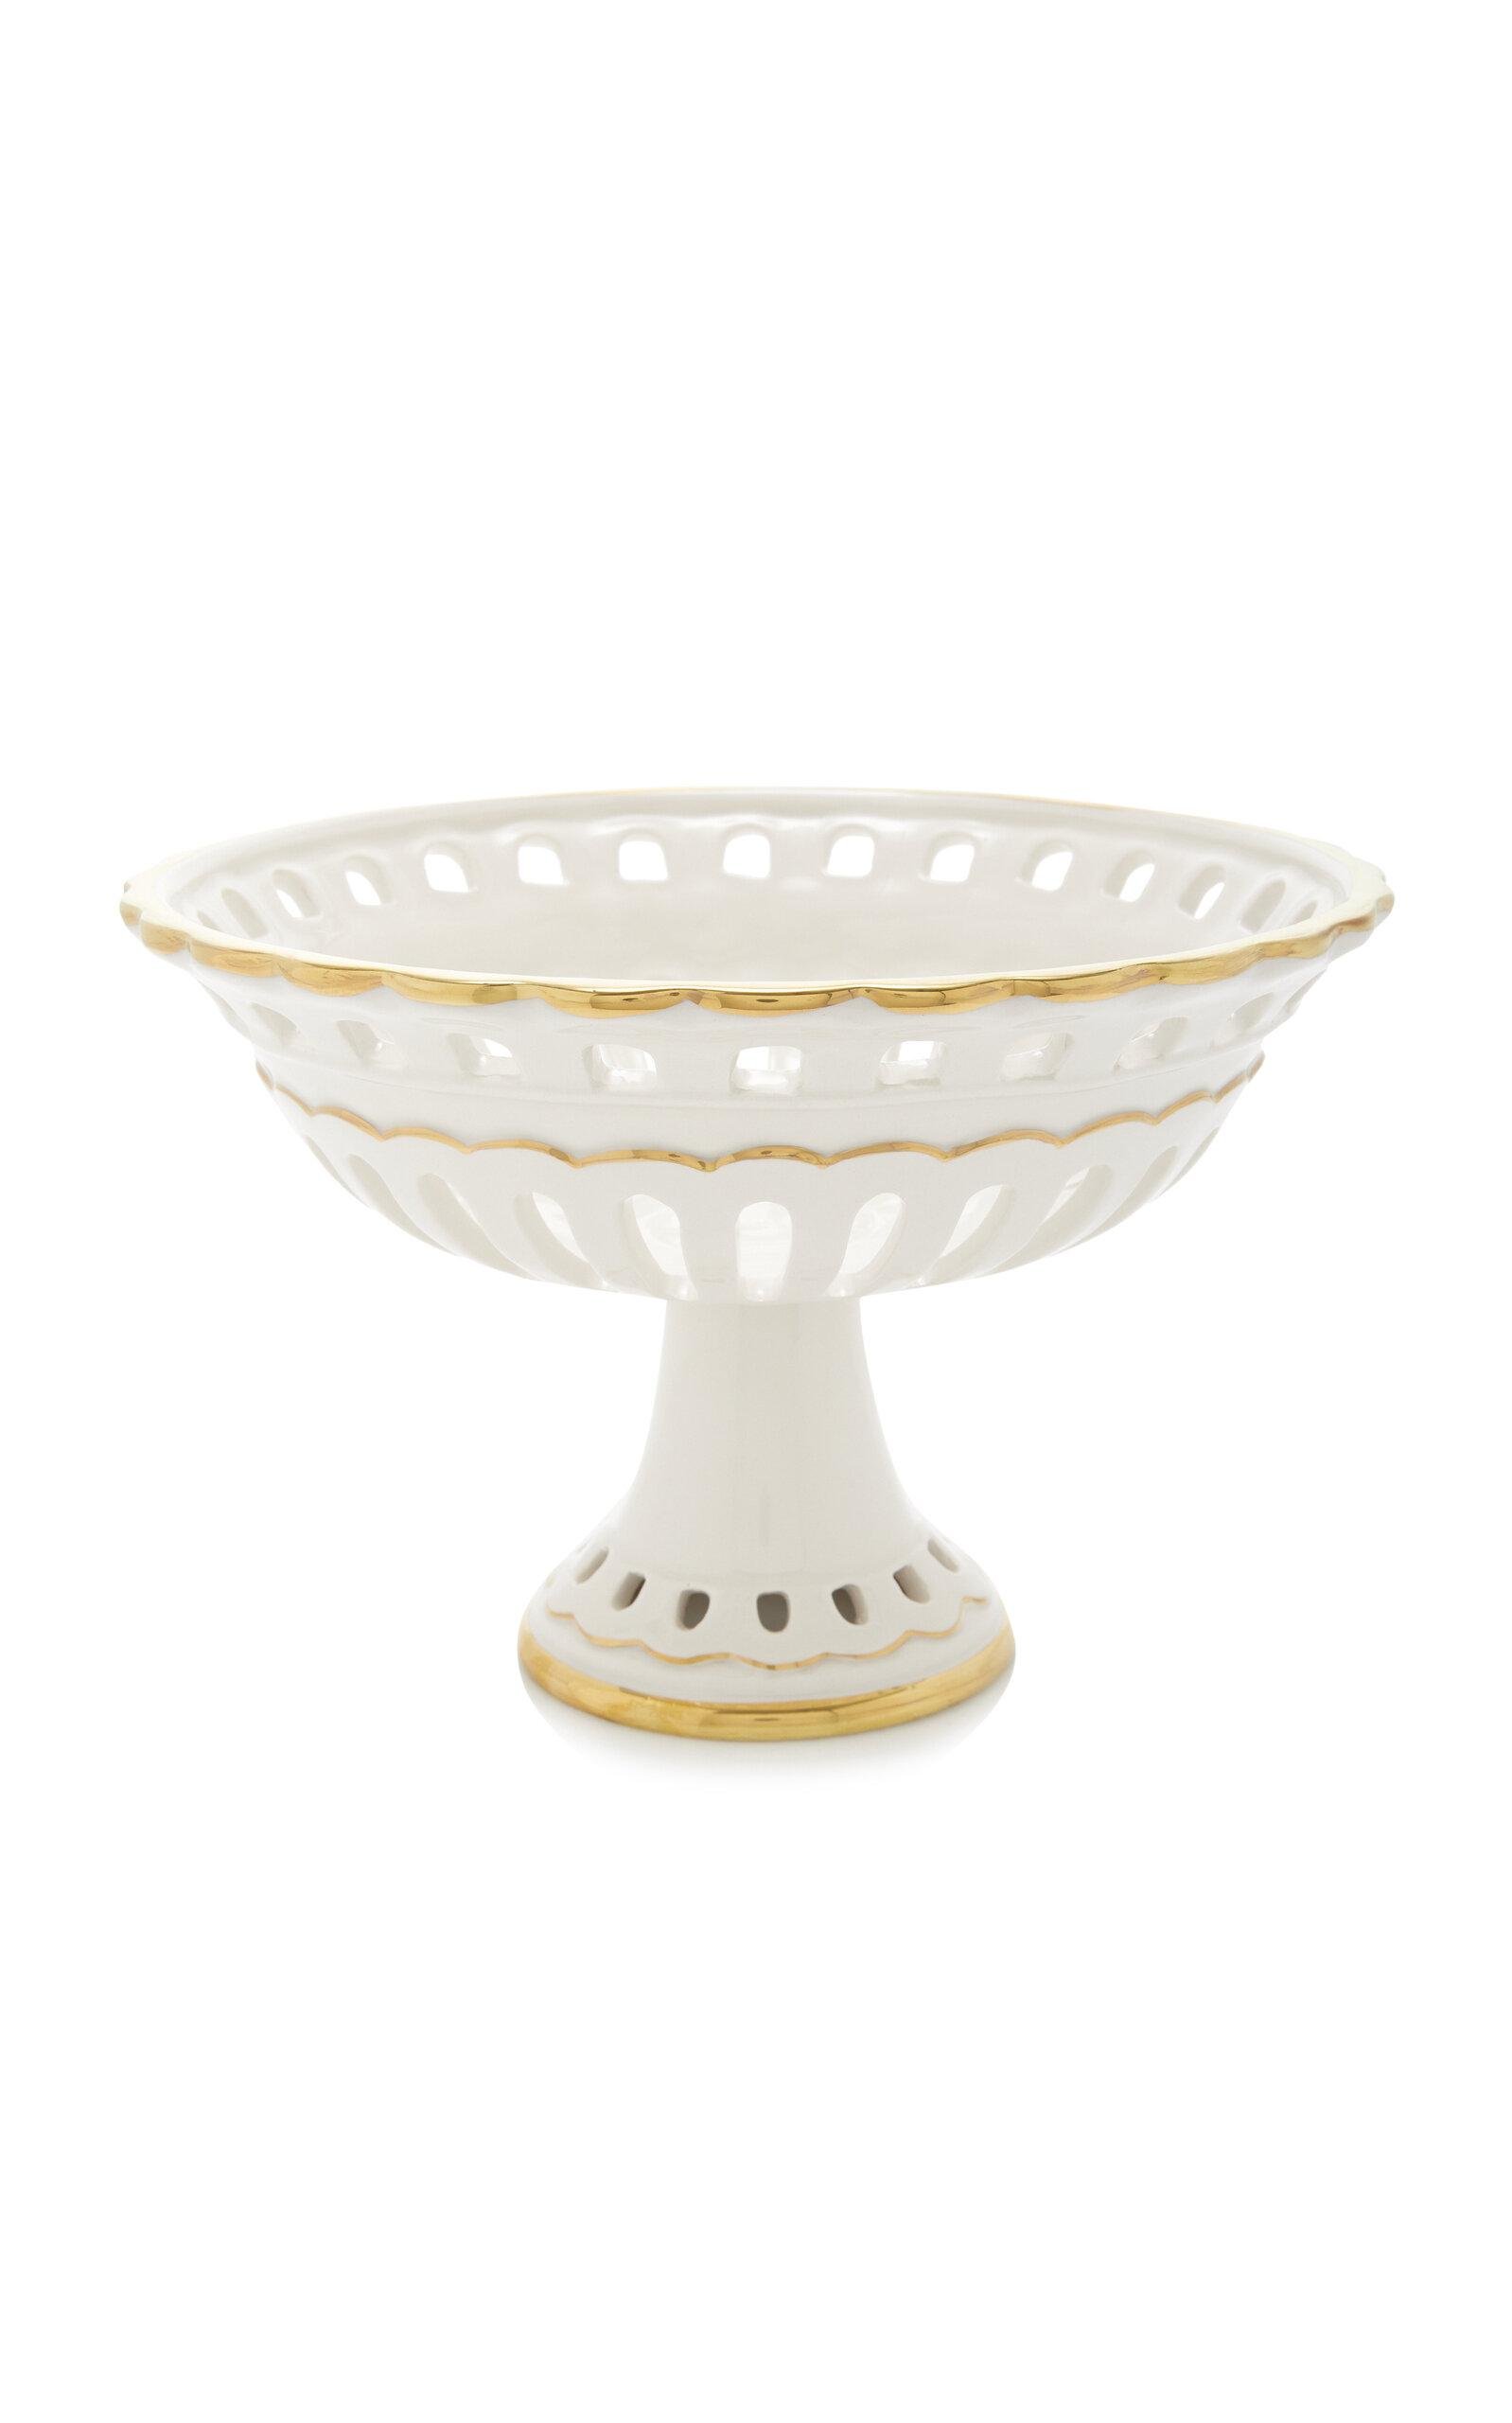 Moda Domus - Balconata Creamware Footted Bowl - Gold - Moda Operandi by MODA DOMUS